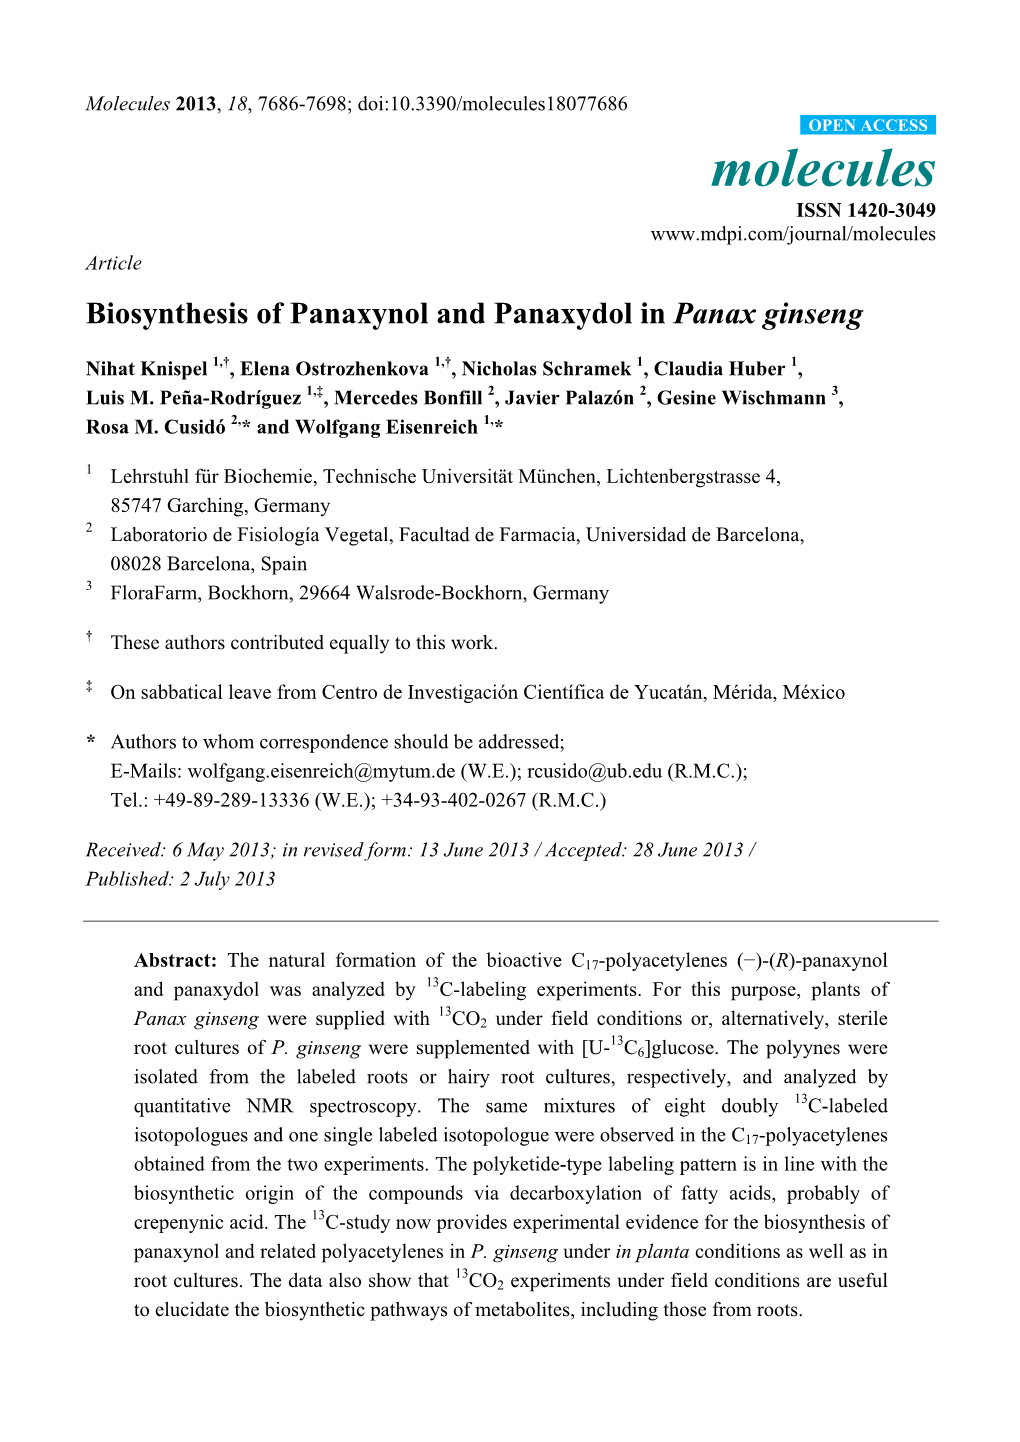 Biosynthesis of Panaxynol and Panaxydol in Panax Ginseng